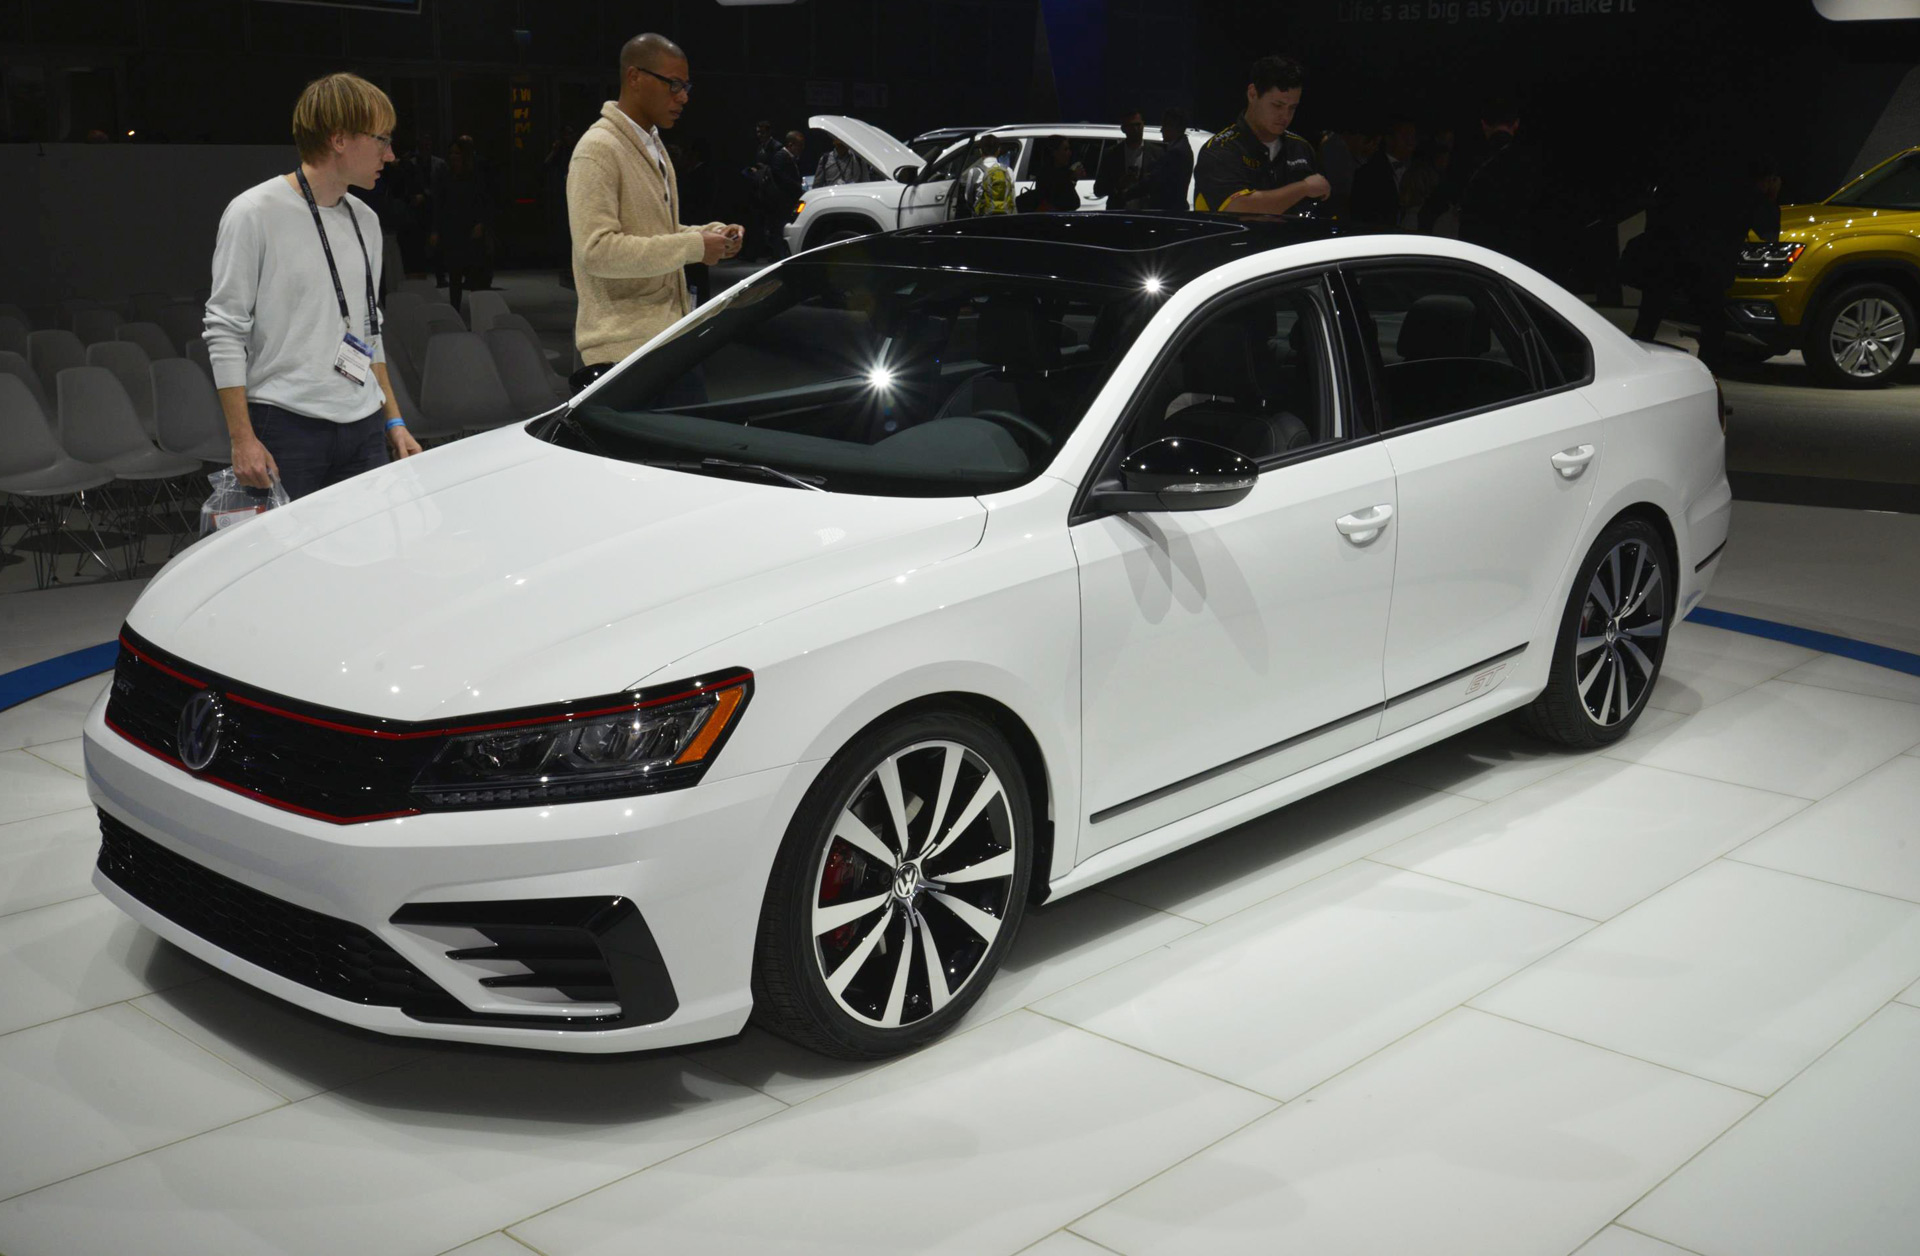 VW Passat GT concept brings near-R potential to family sedan